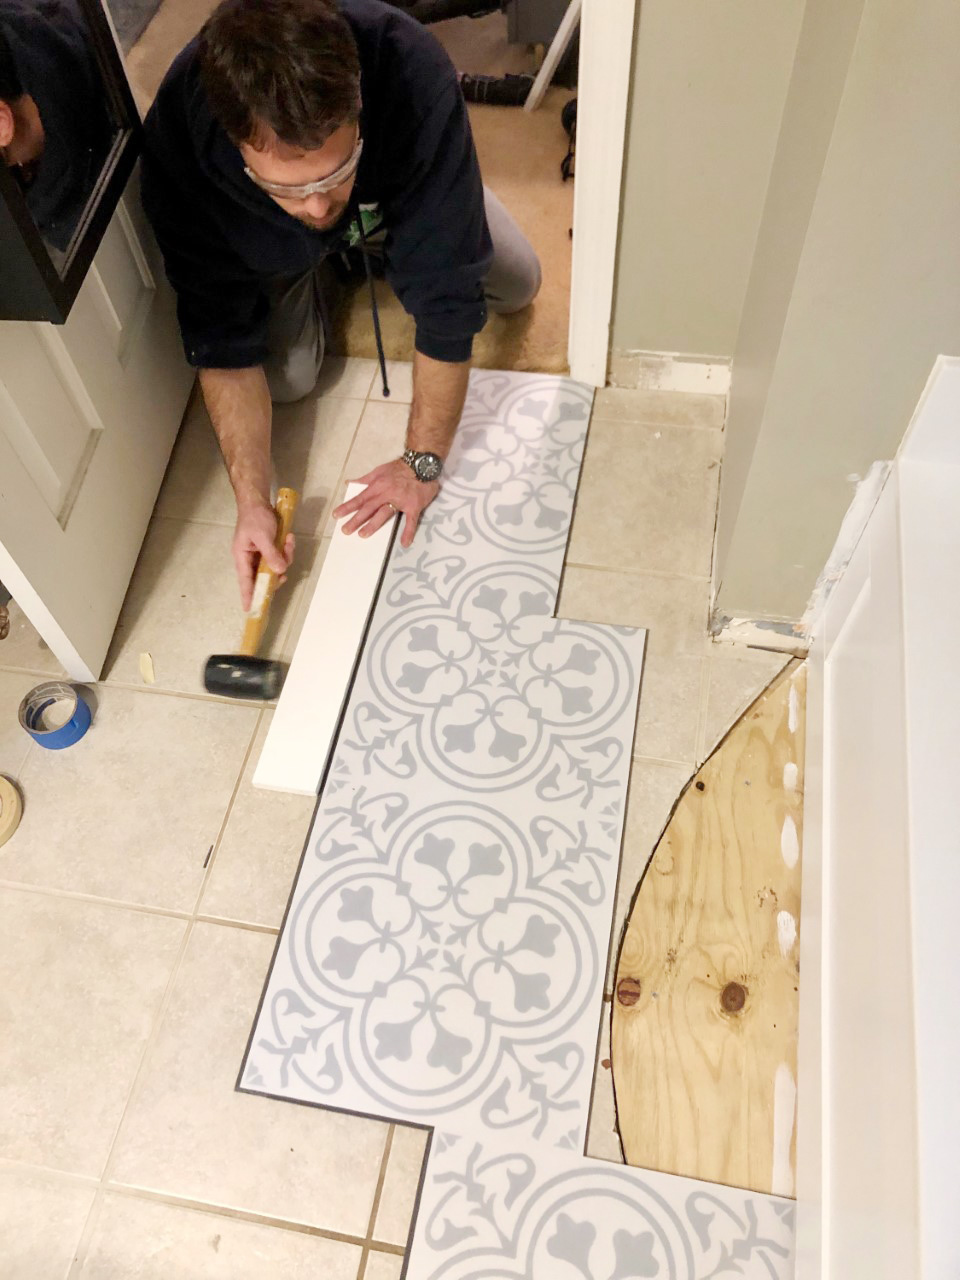 Lvt Flooring Over Existing Tile The, Vinyl Plank Flooring Transition To Tile